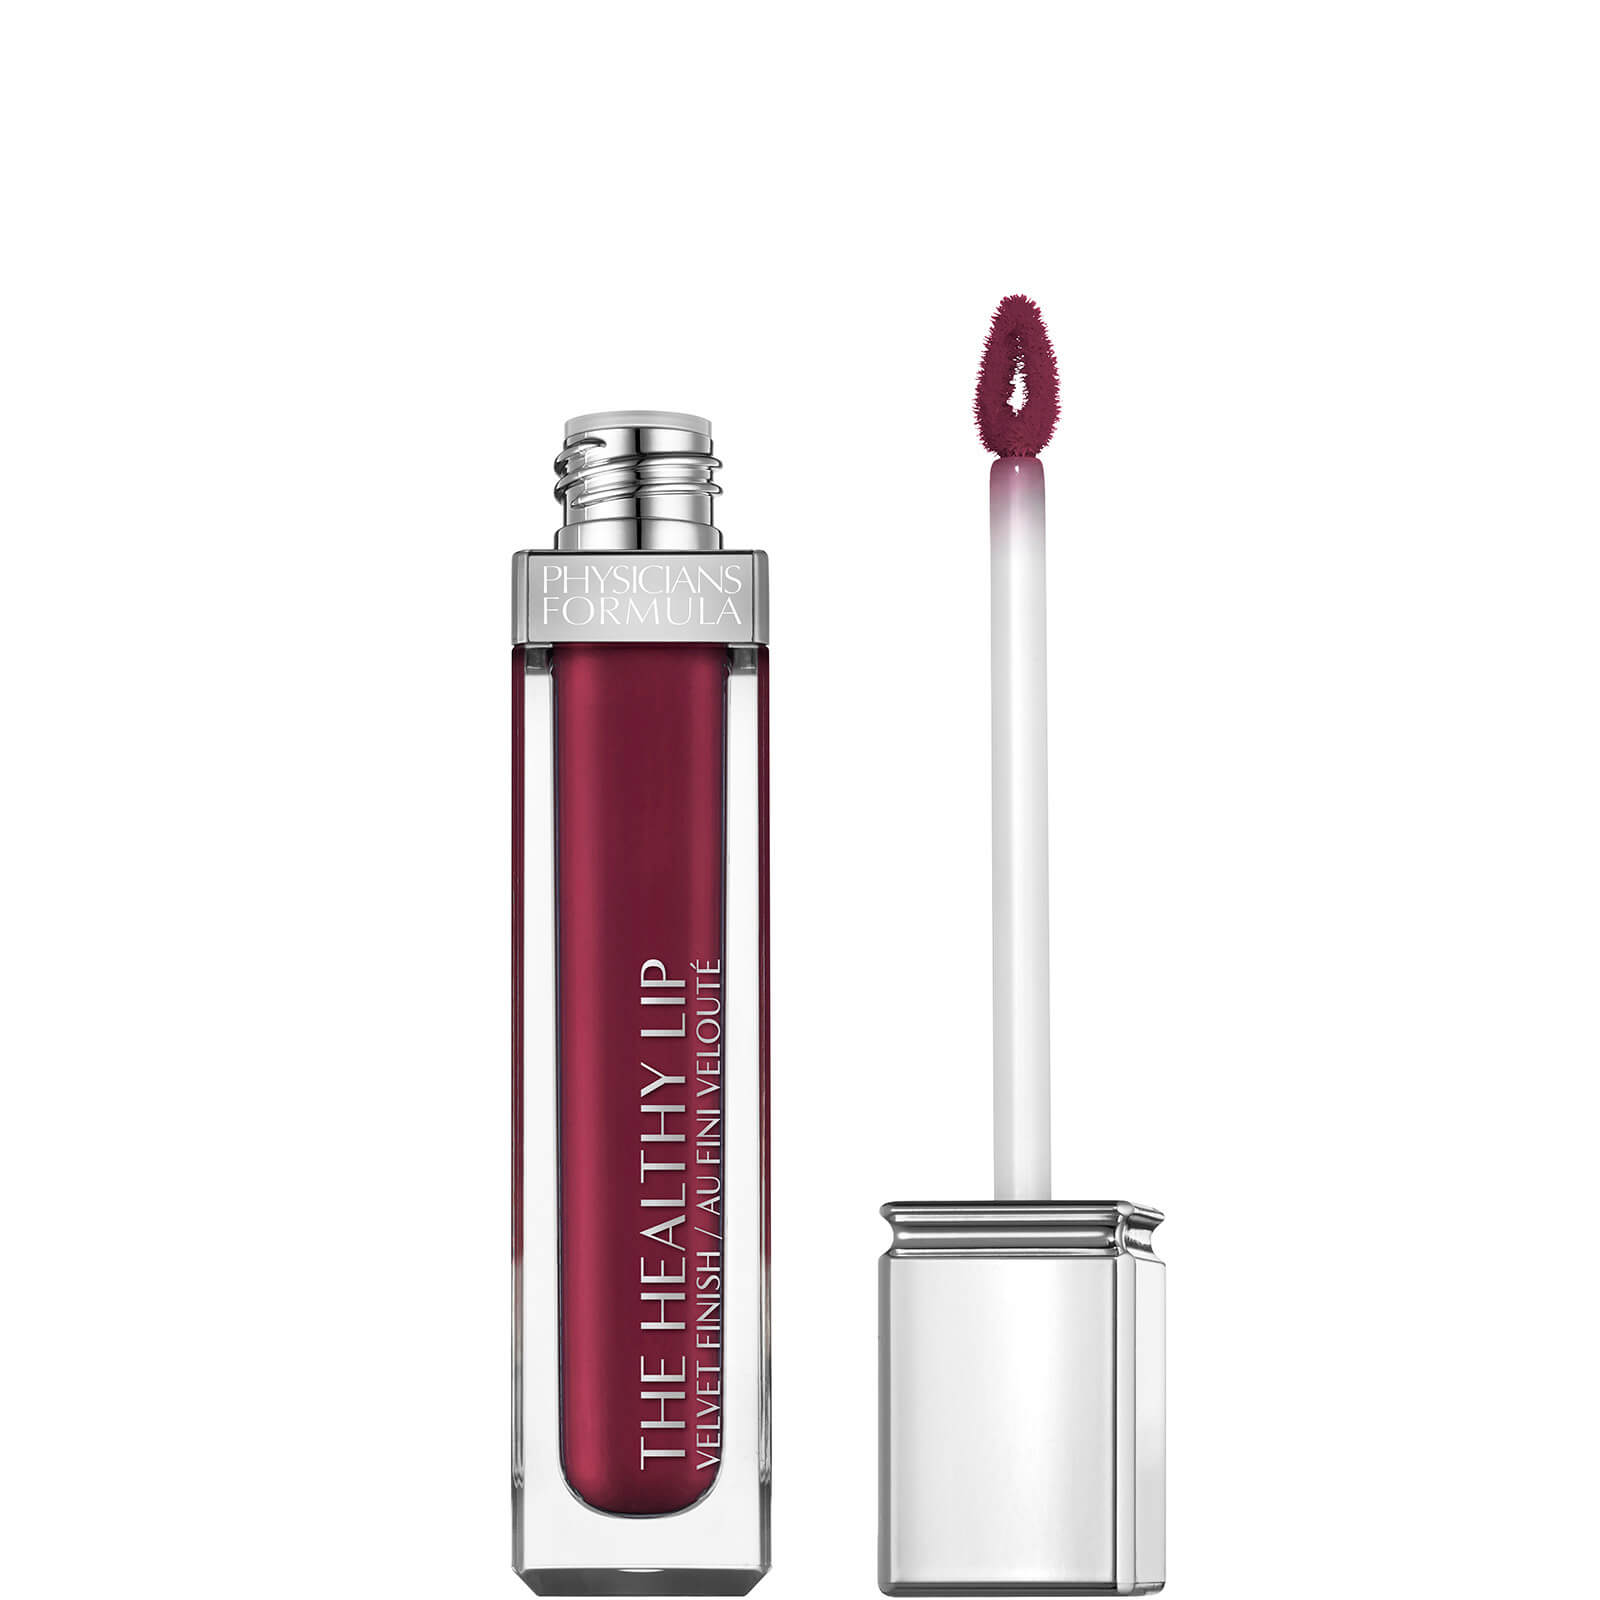 Physicians Formula The Healthy Lip Velvet Liquid Lipstick 7ml (Various Shades) - Noir-ishing Plum